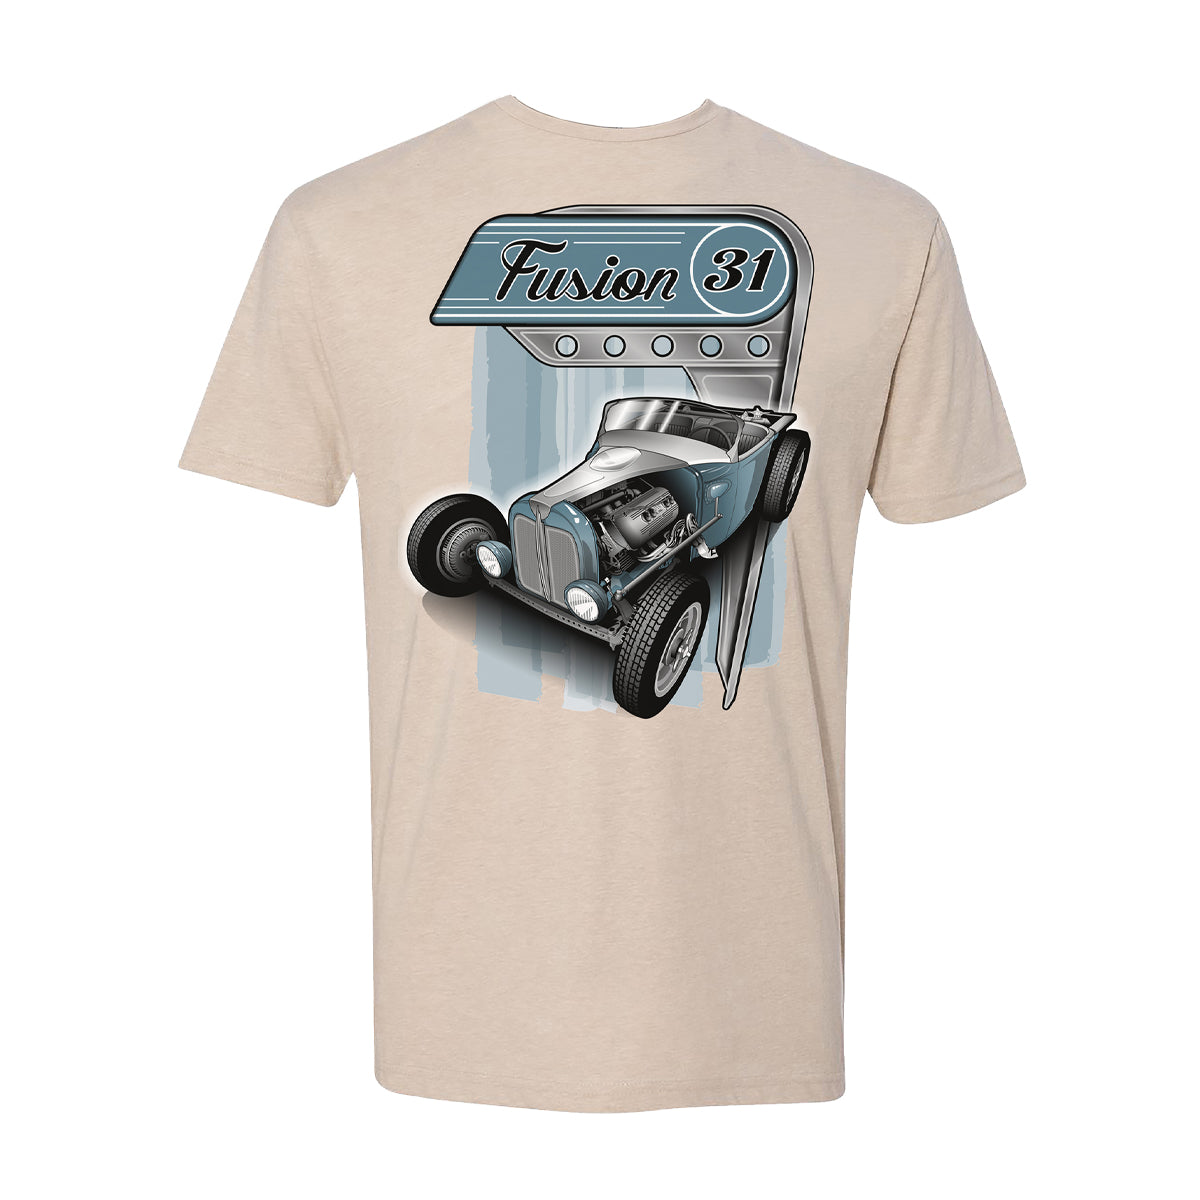 Fusion 31 T-Shirt – Classic Car Studio | Official Online Store